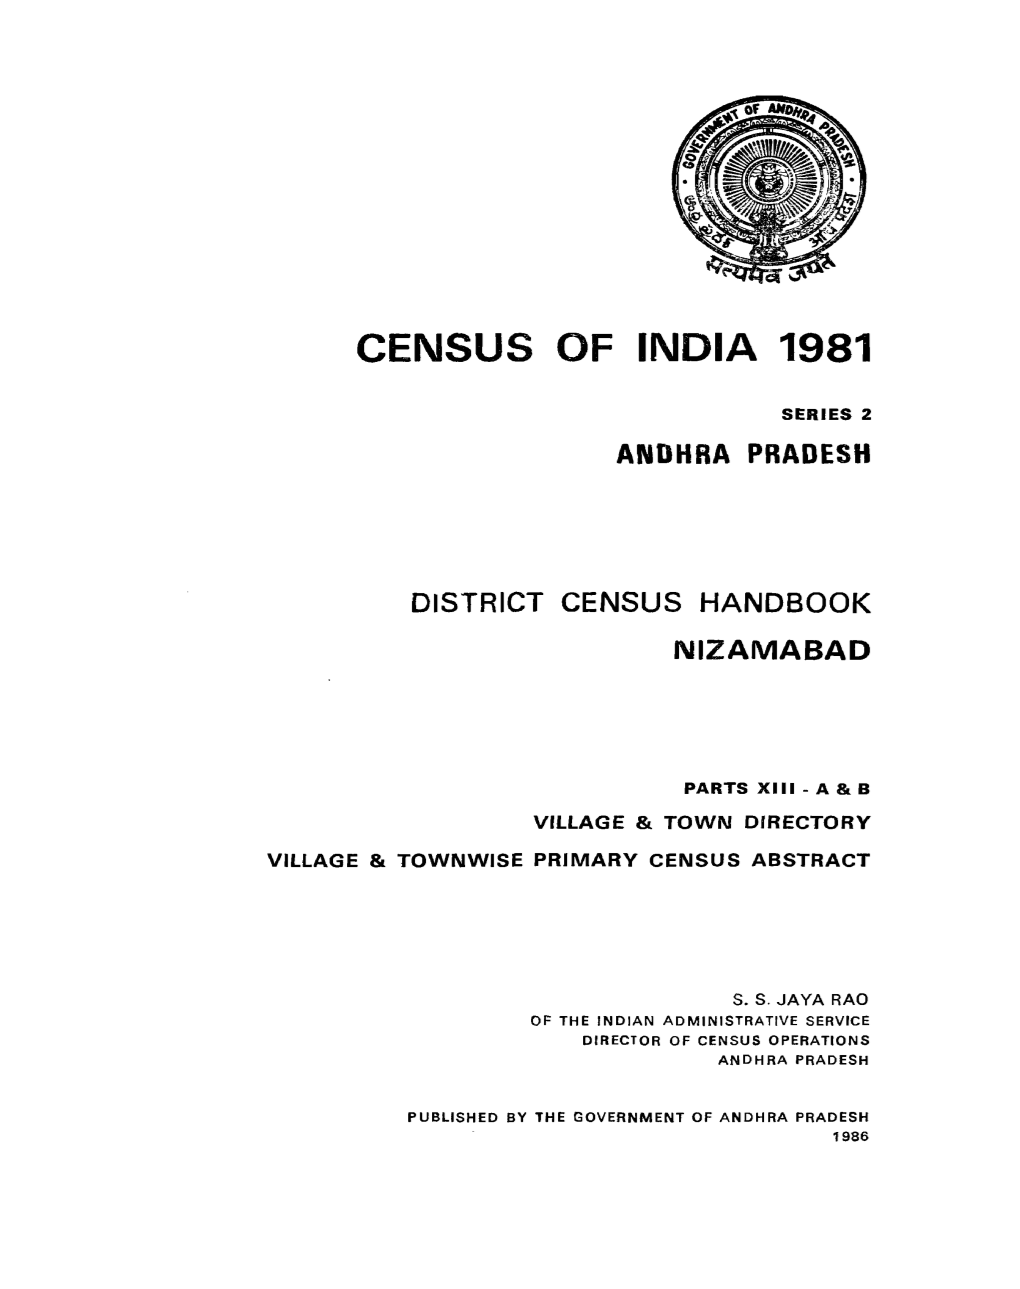 District Census Handbook, Nizamabad, Part XIII a & B, Series-2